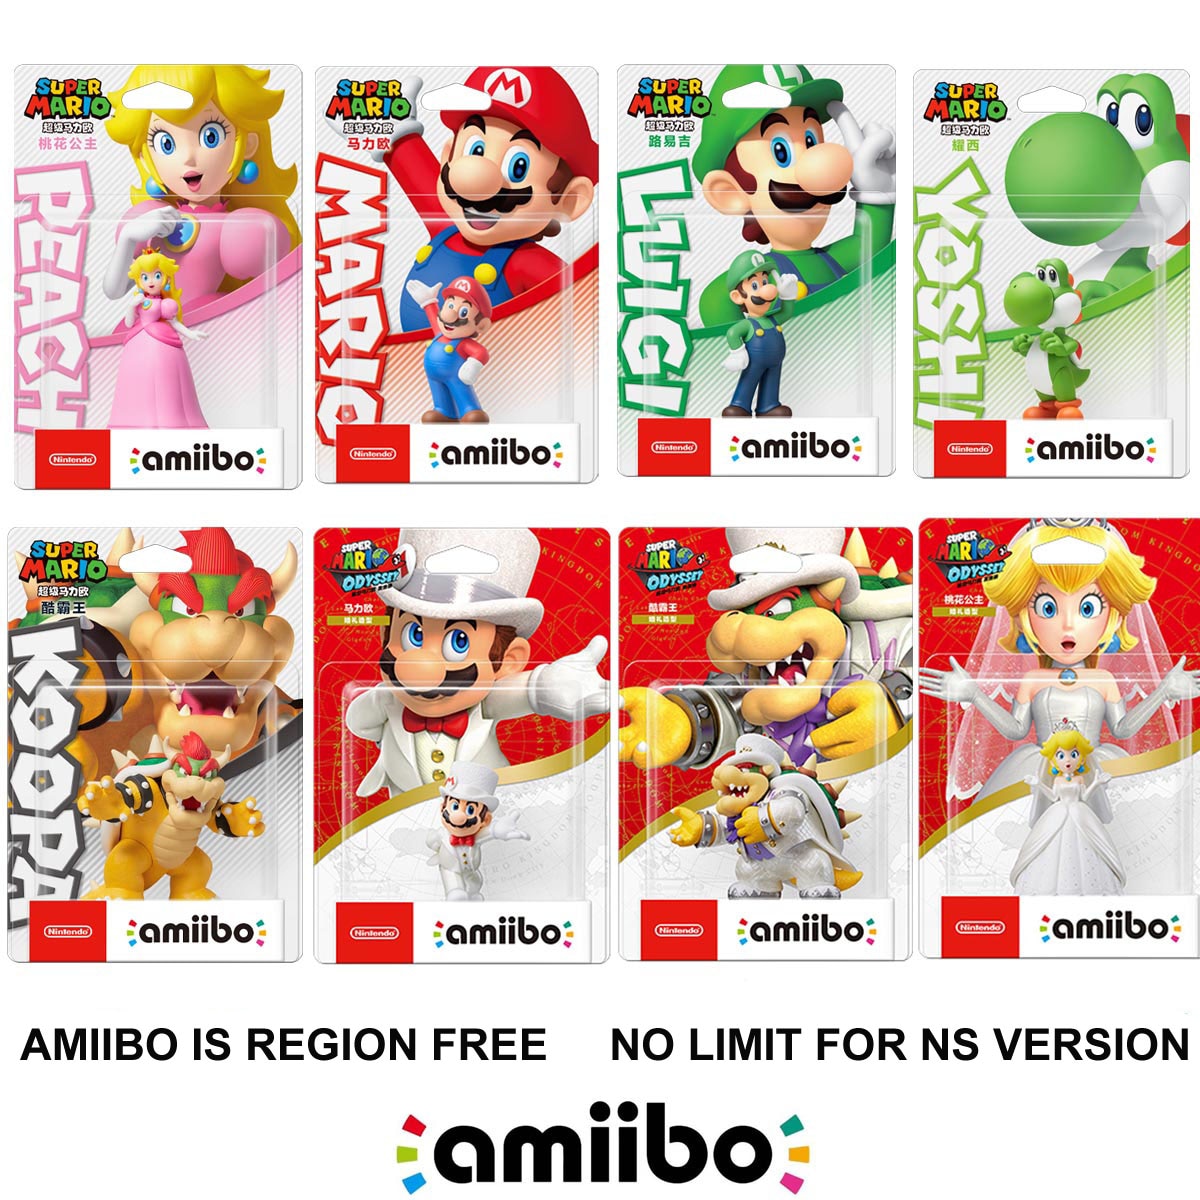 Super Mario Odyssey Game, Wii U, Nintendo Switch, Amiibo, Gameplay, Luigi,  Wiki, Guide Unofficial on Apple Books